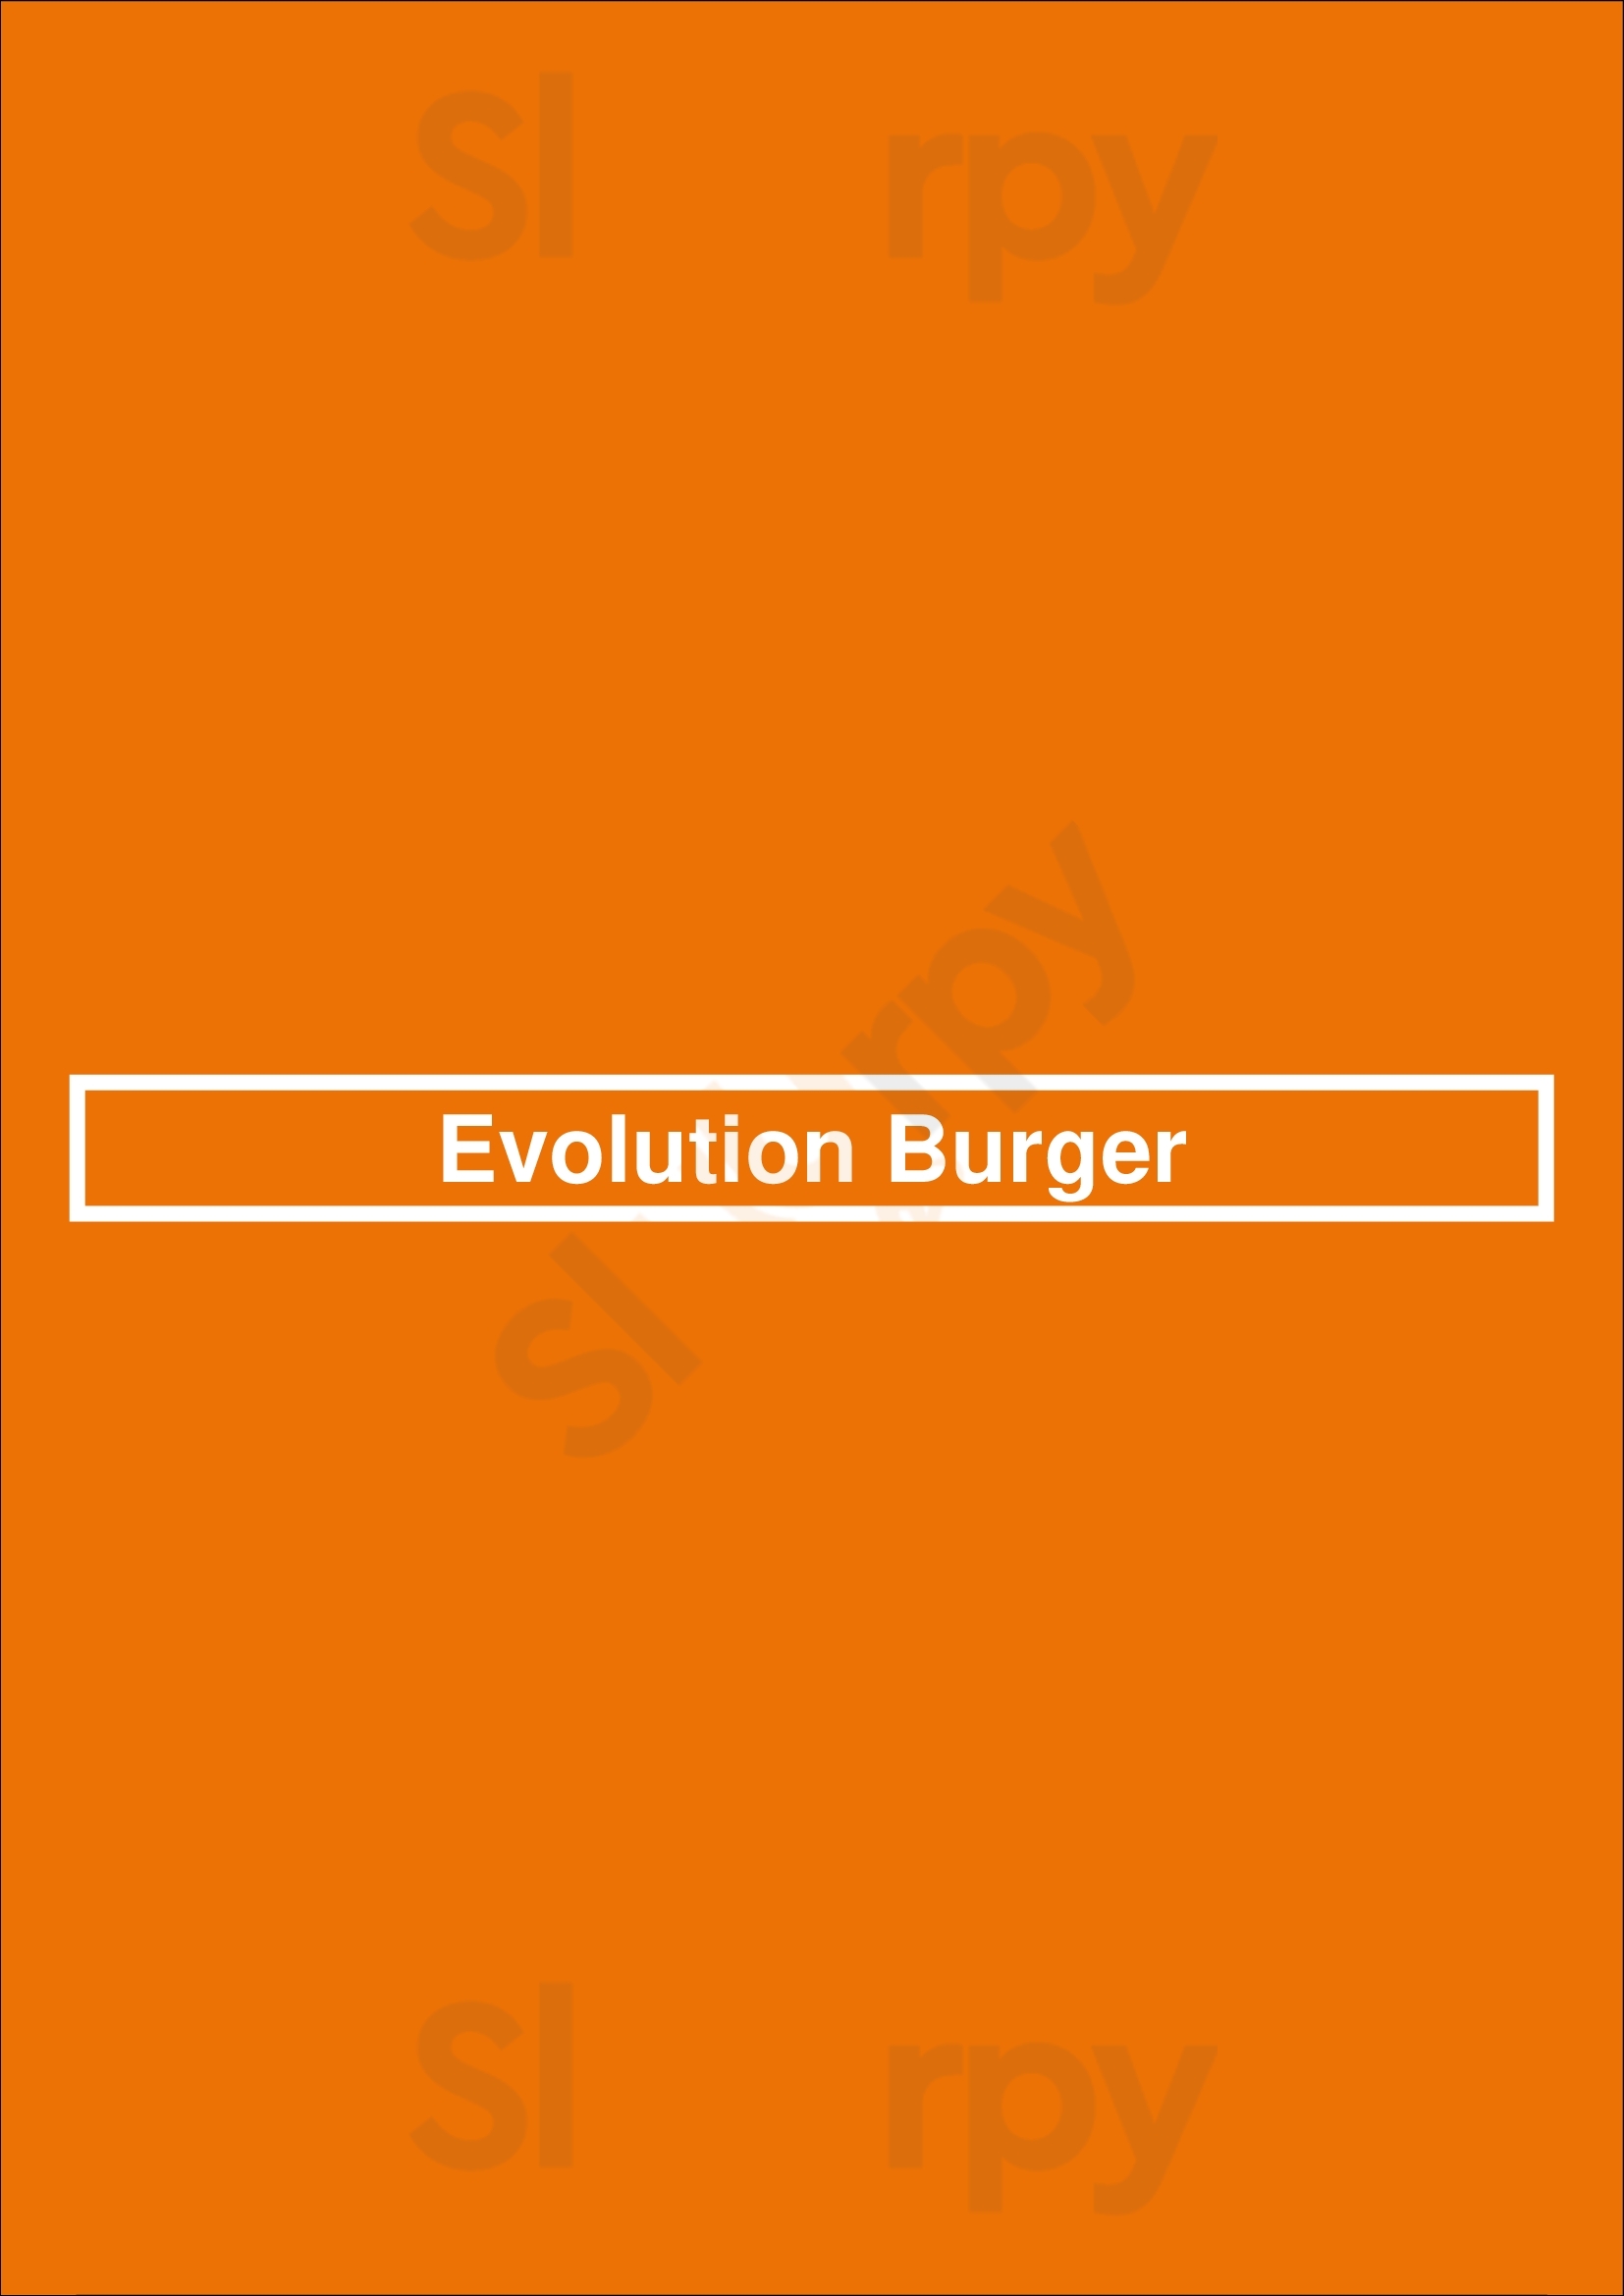 Evolution Burger Los Angeles Menu - 1